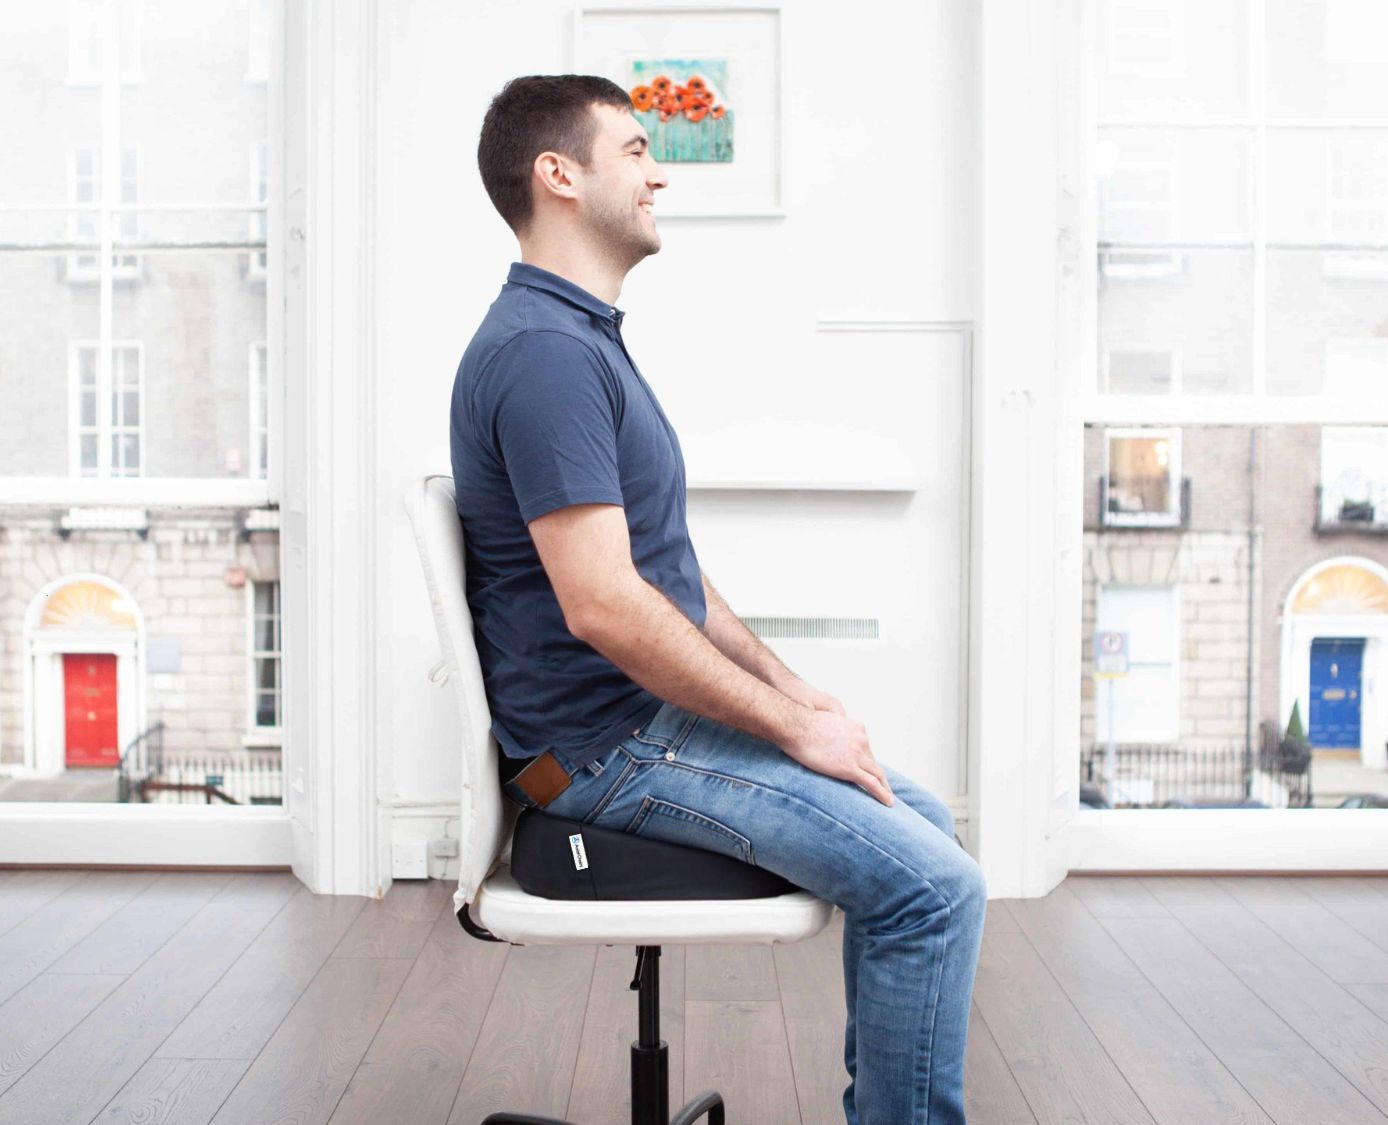 Axial Orthopedic Seat Cushion®, Ergonomic Seat Chair Wedge